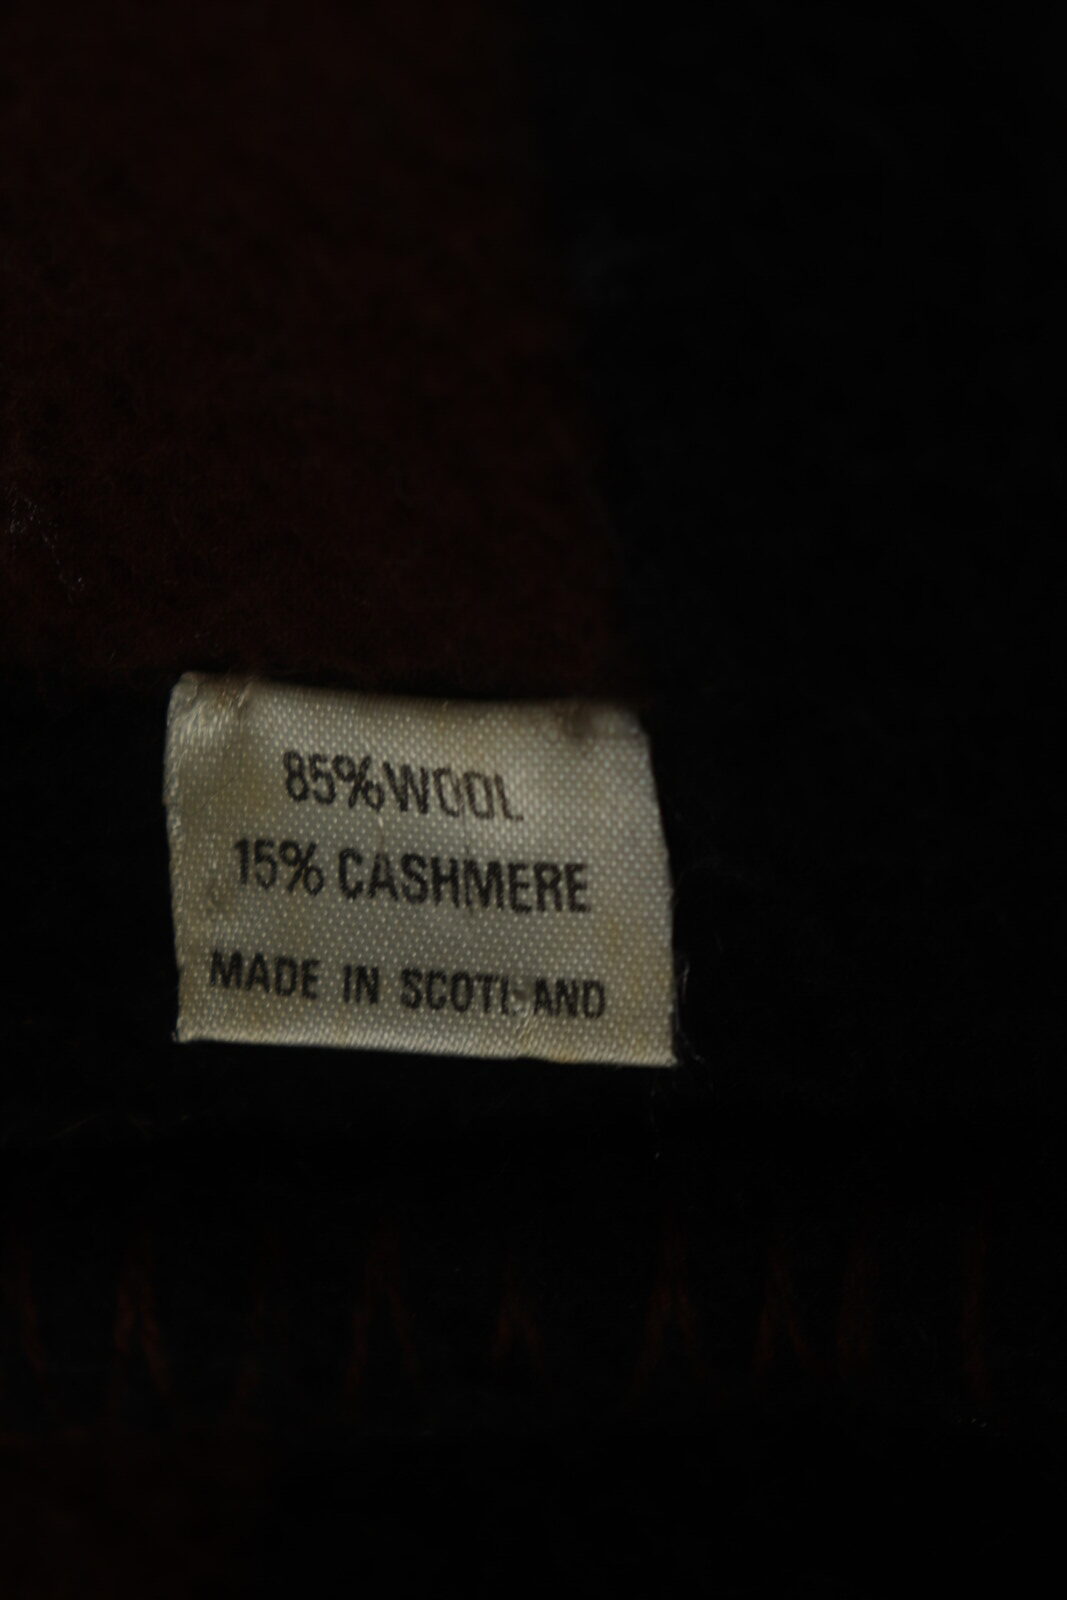 Louis Vuitton,blanket,made in scotland,france,vintage